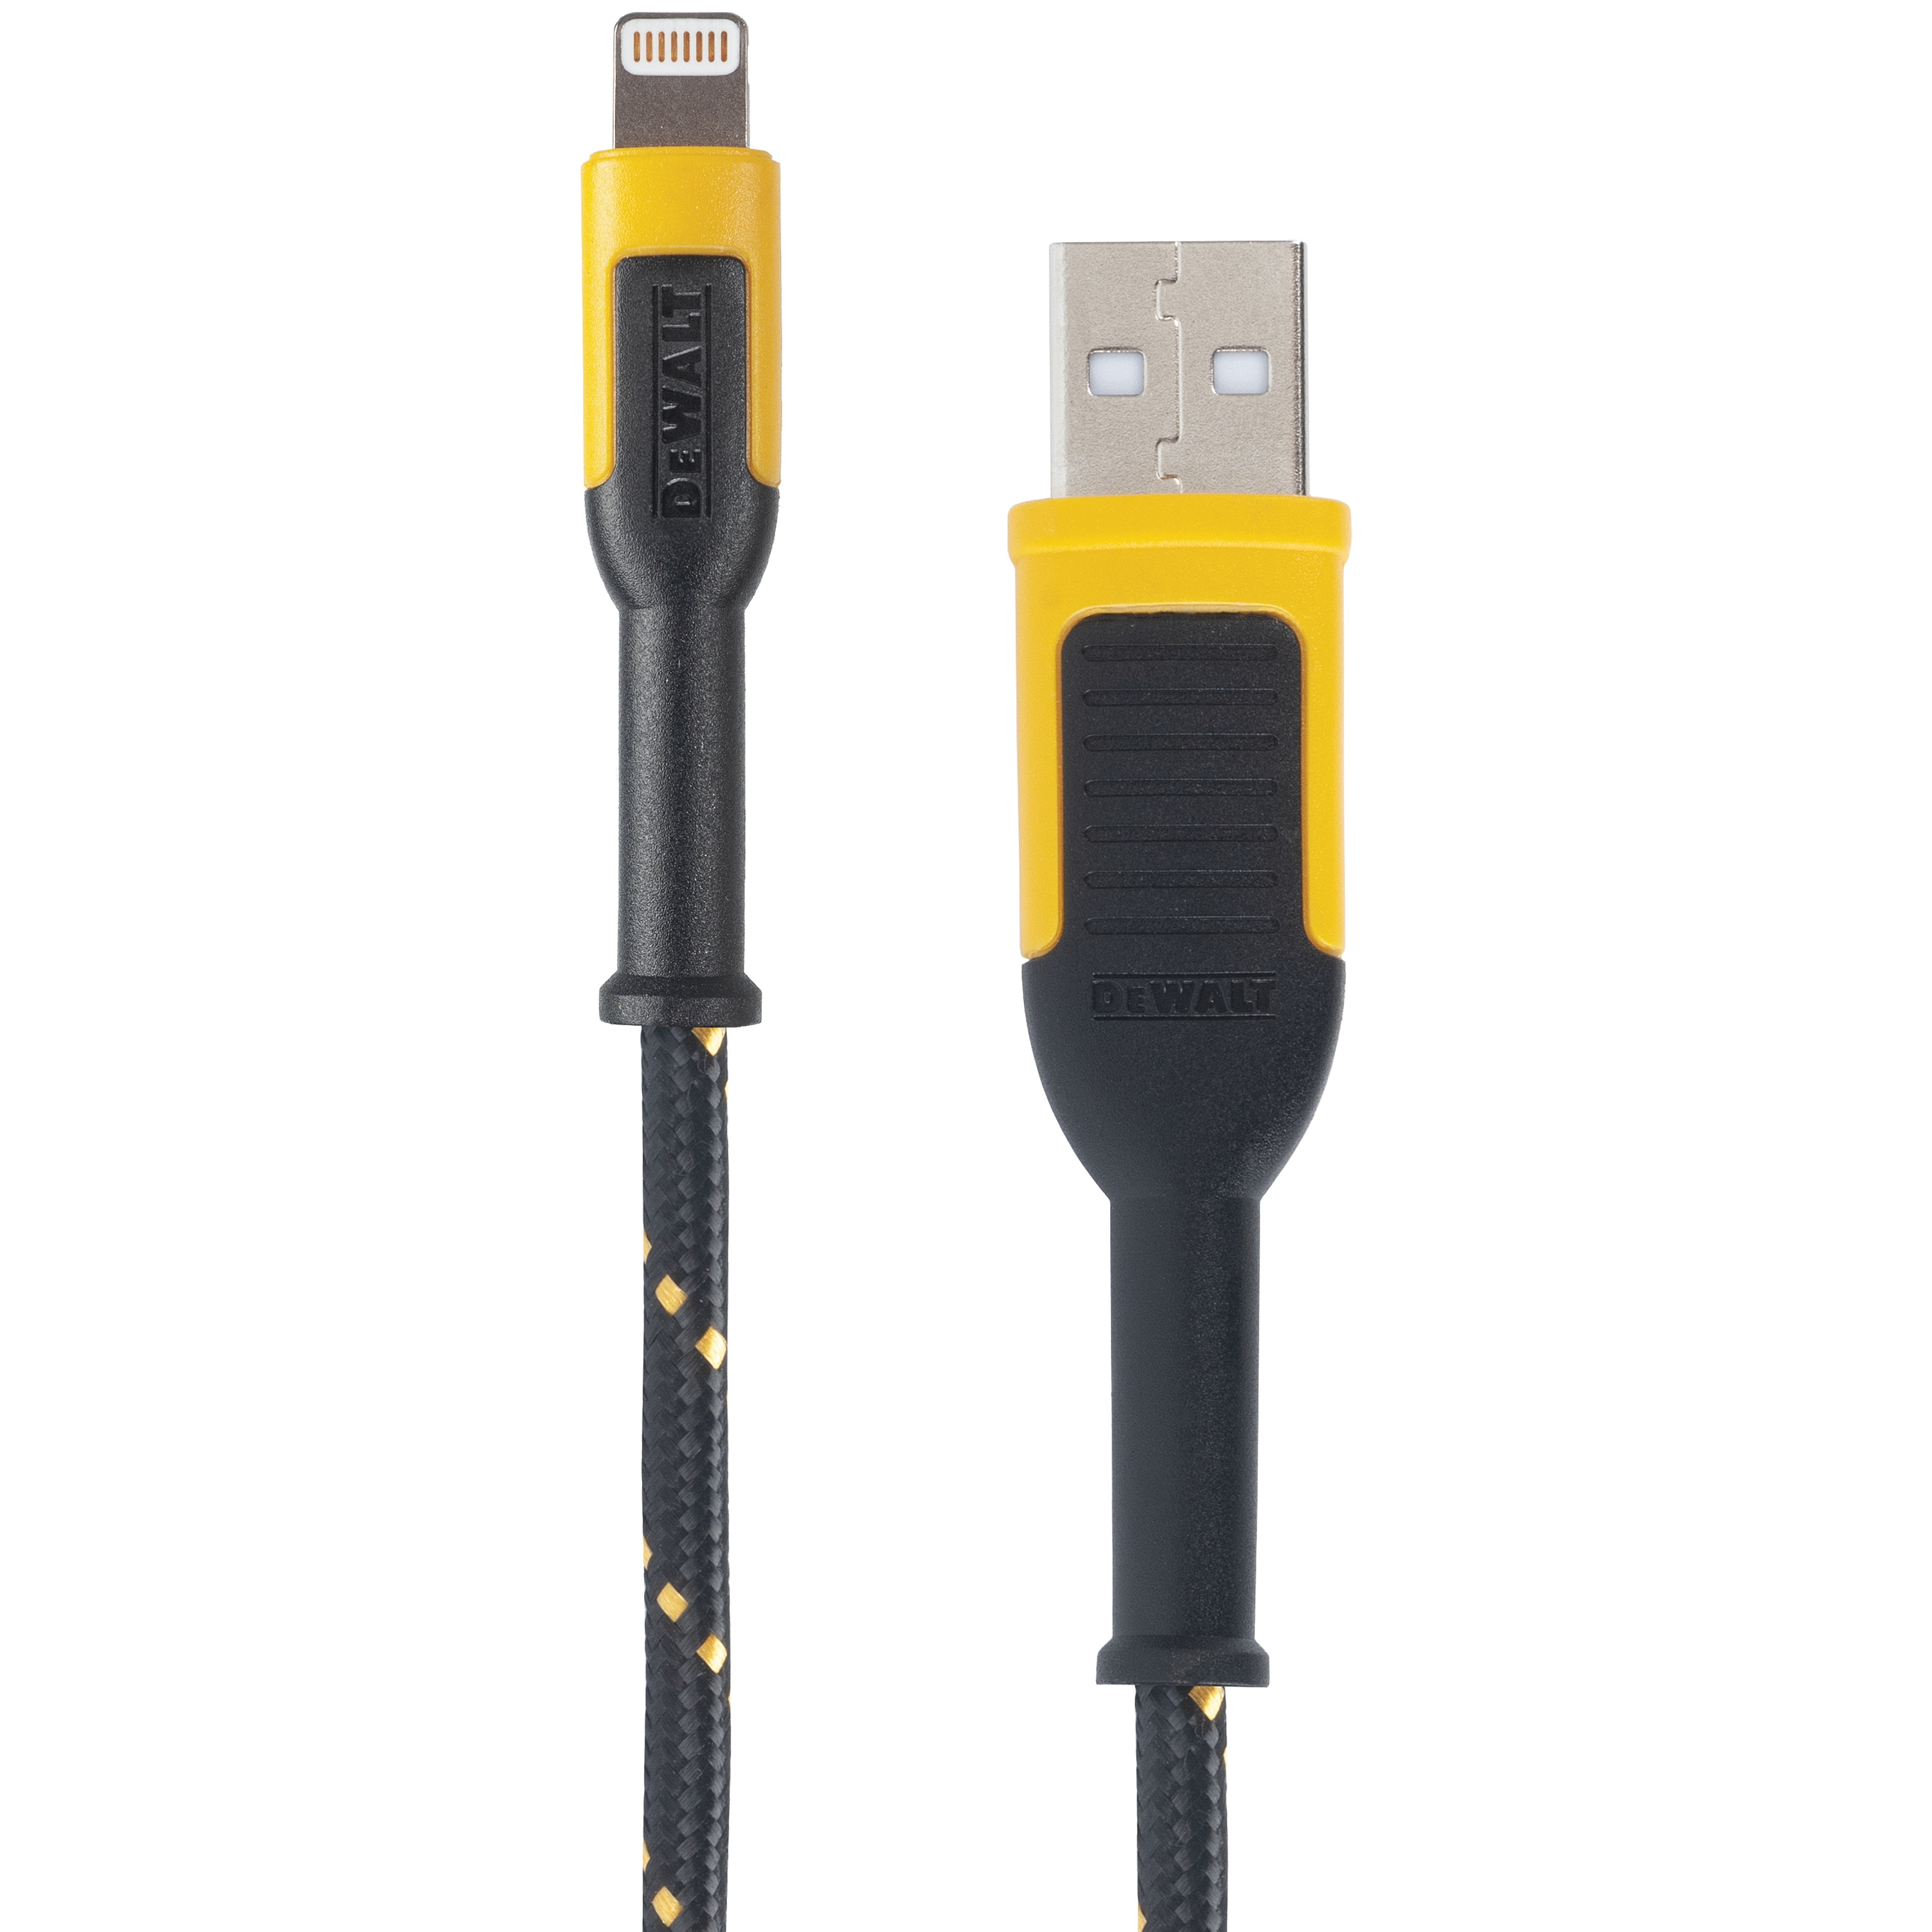 131 1325 DW2 Charger Cable, iOS, USB, Kevlar Fiber Sheath, Black/Yellow Sheath, 6 ft L